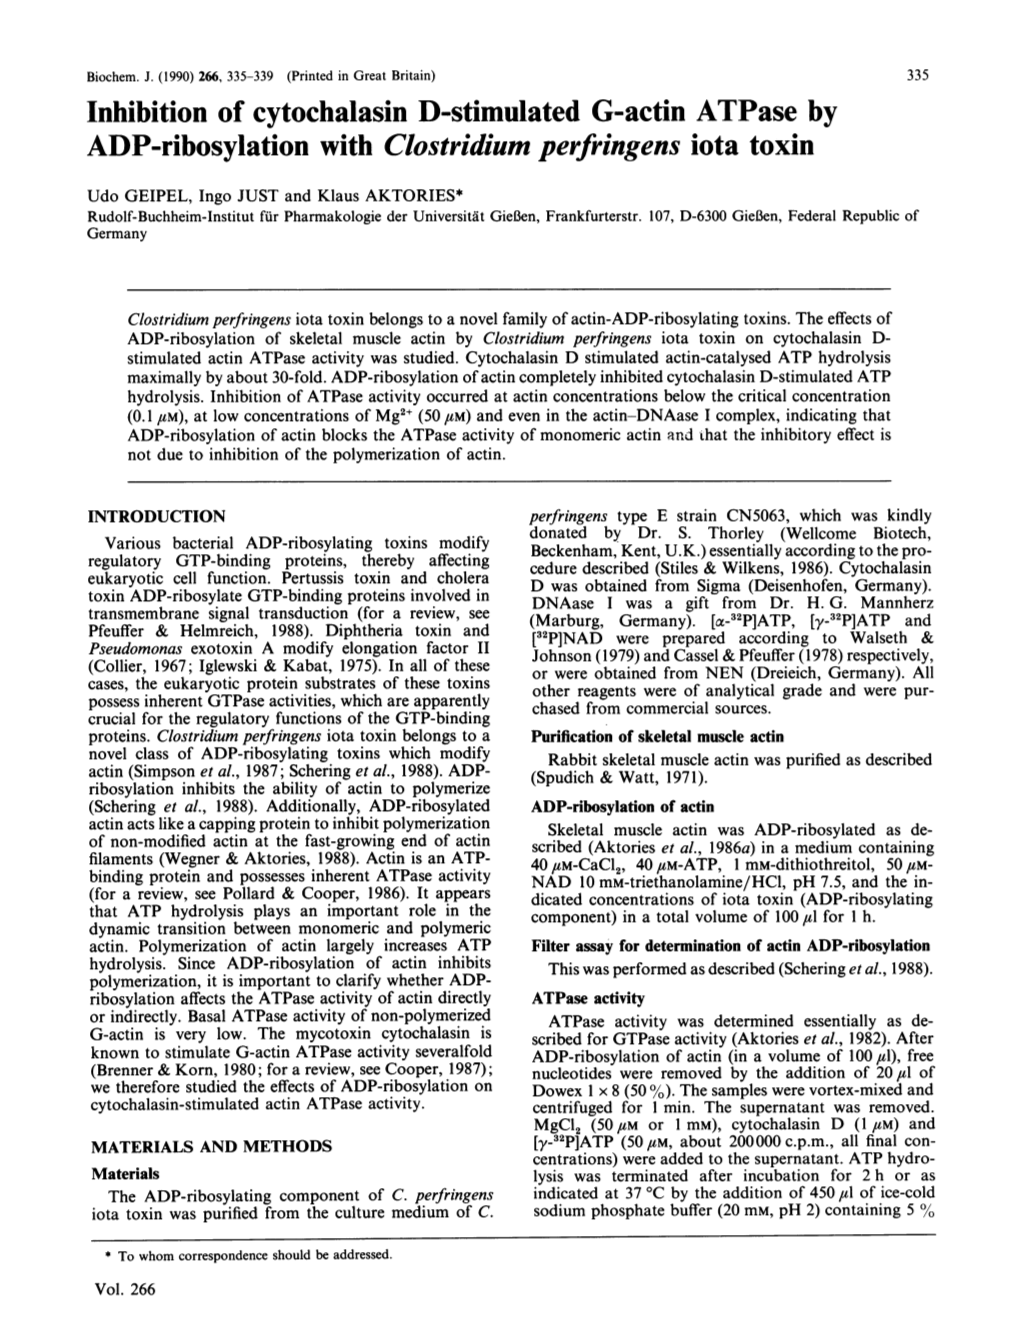 ADP-Ribosylation with Clostridium Perfringens Iota Toxin